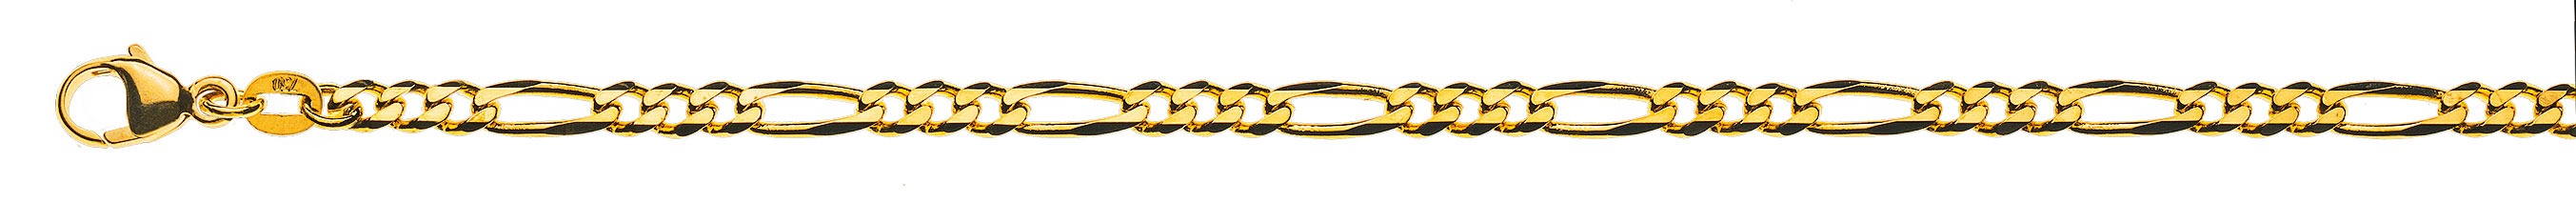 AURONOS Prestige Necklace yellow gold 18K Figaro necklace 55cm 3.4mm